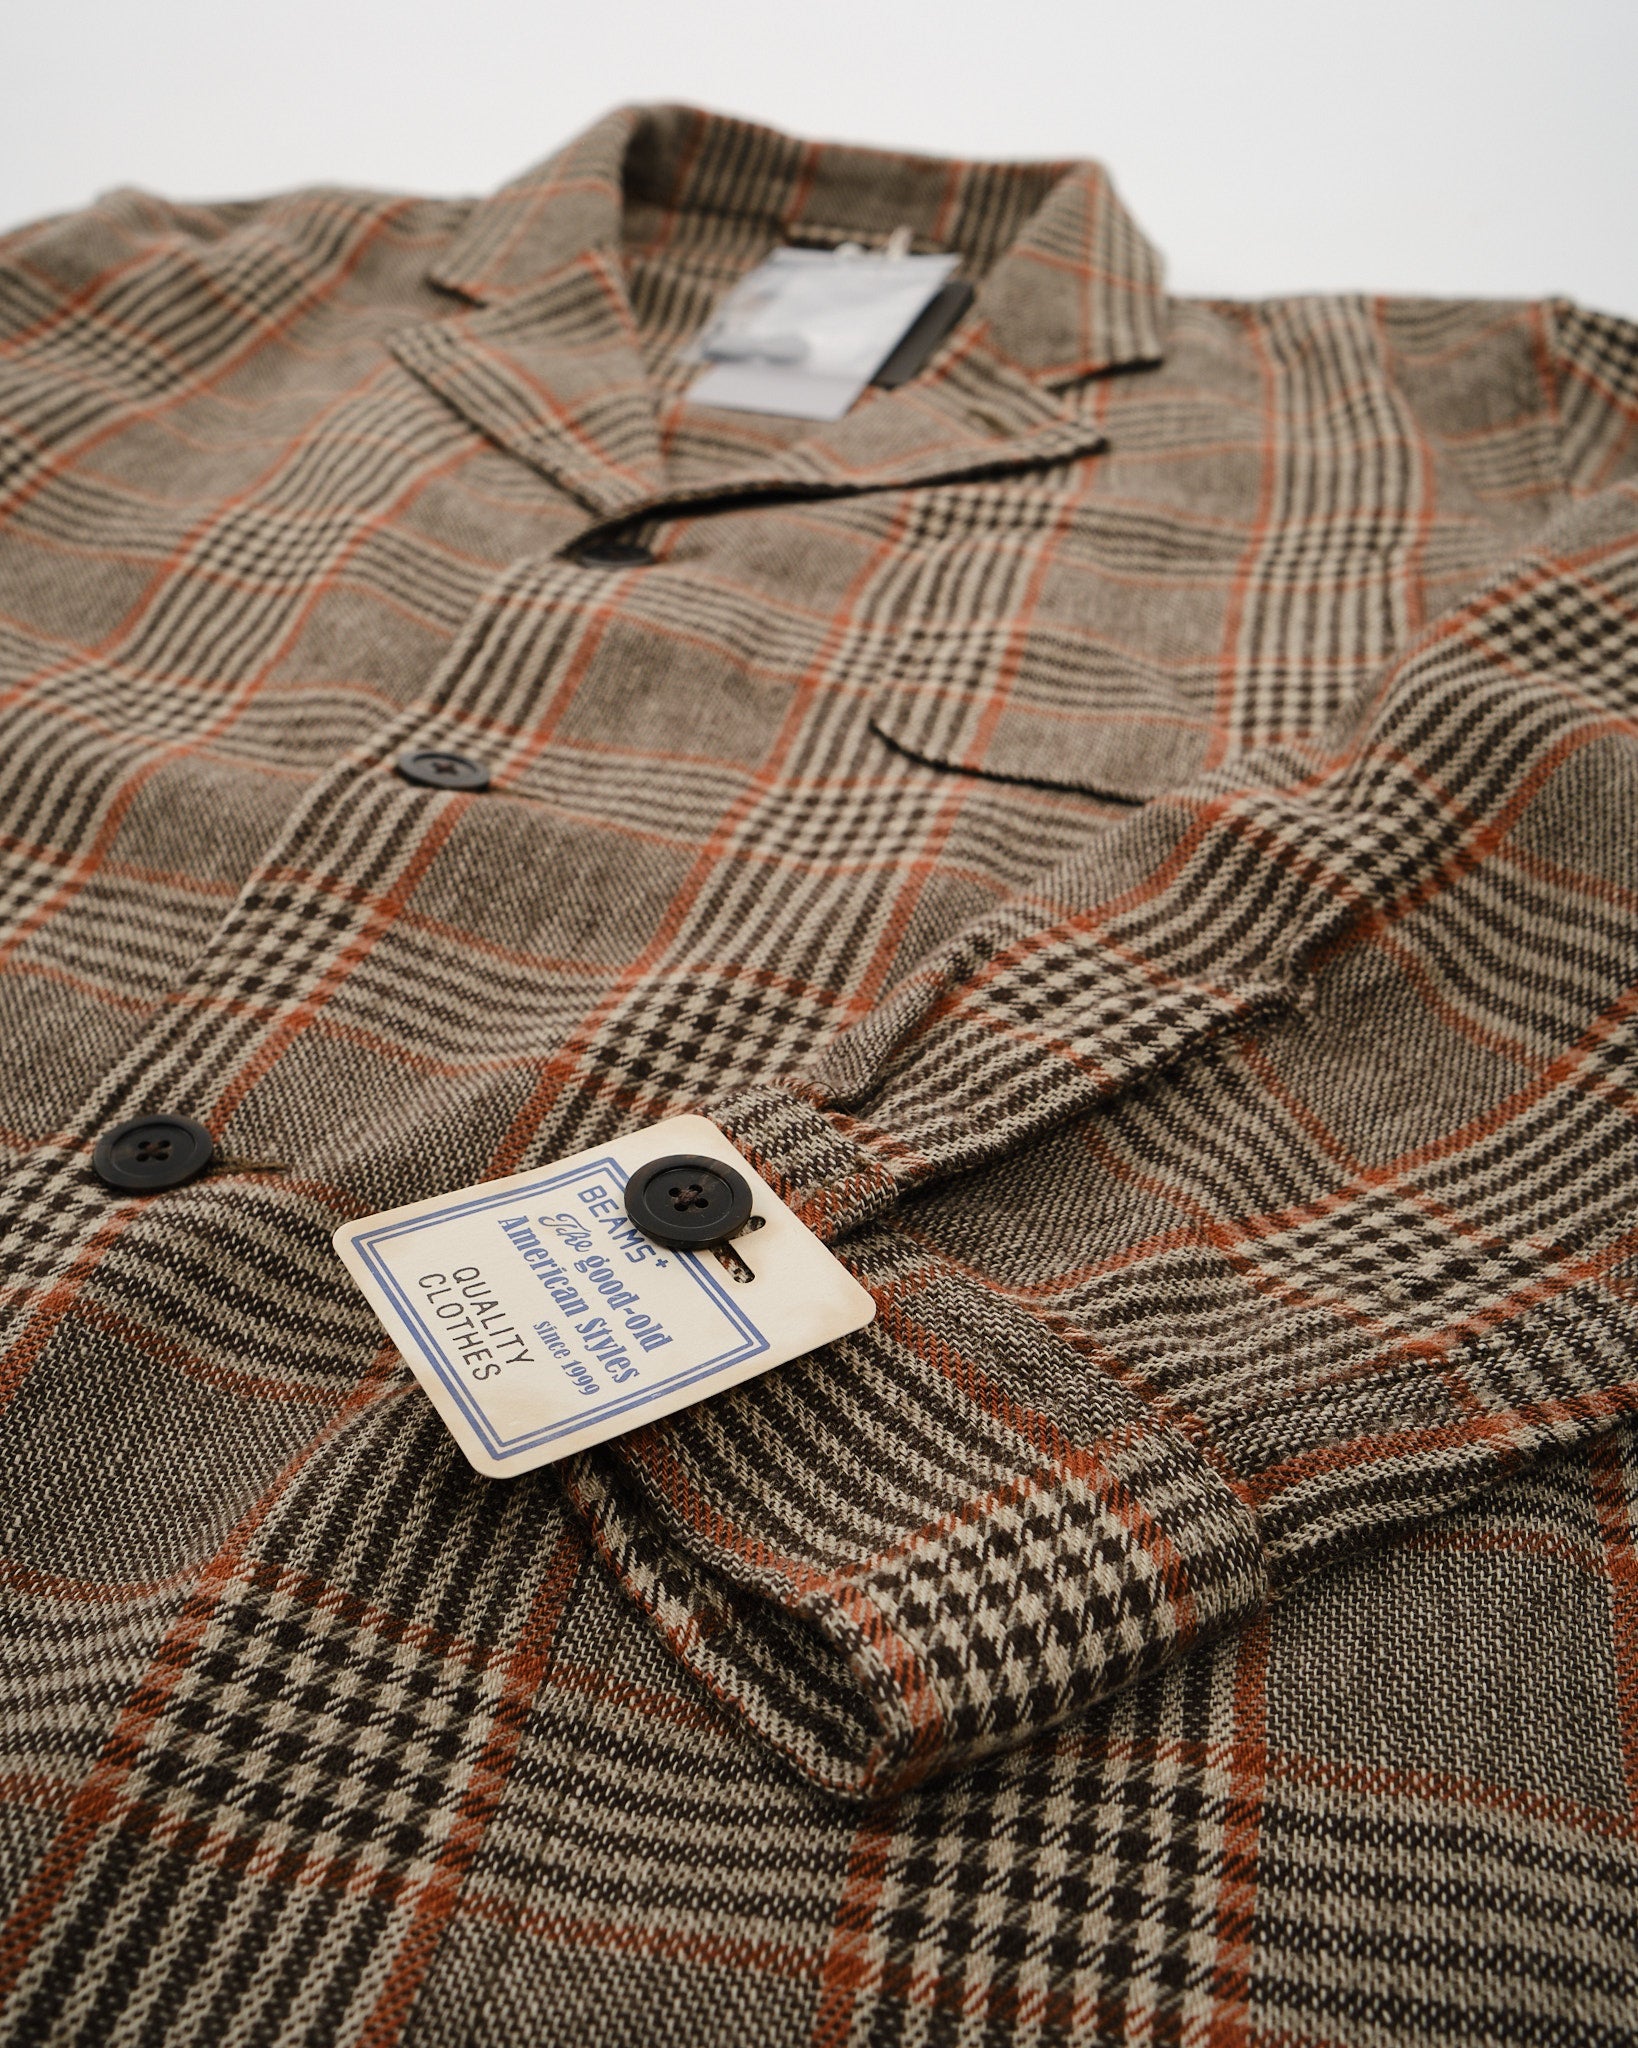 4B Cuffs Jacket Wool Linen Cotton Glen Plaid - Meadow